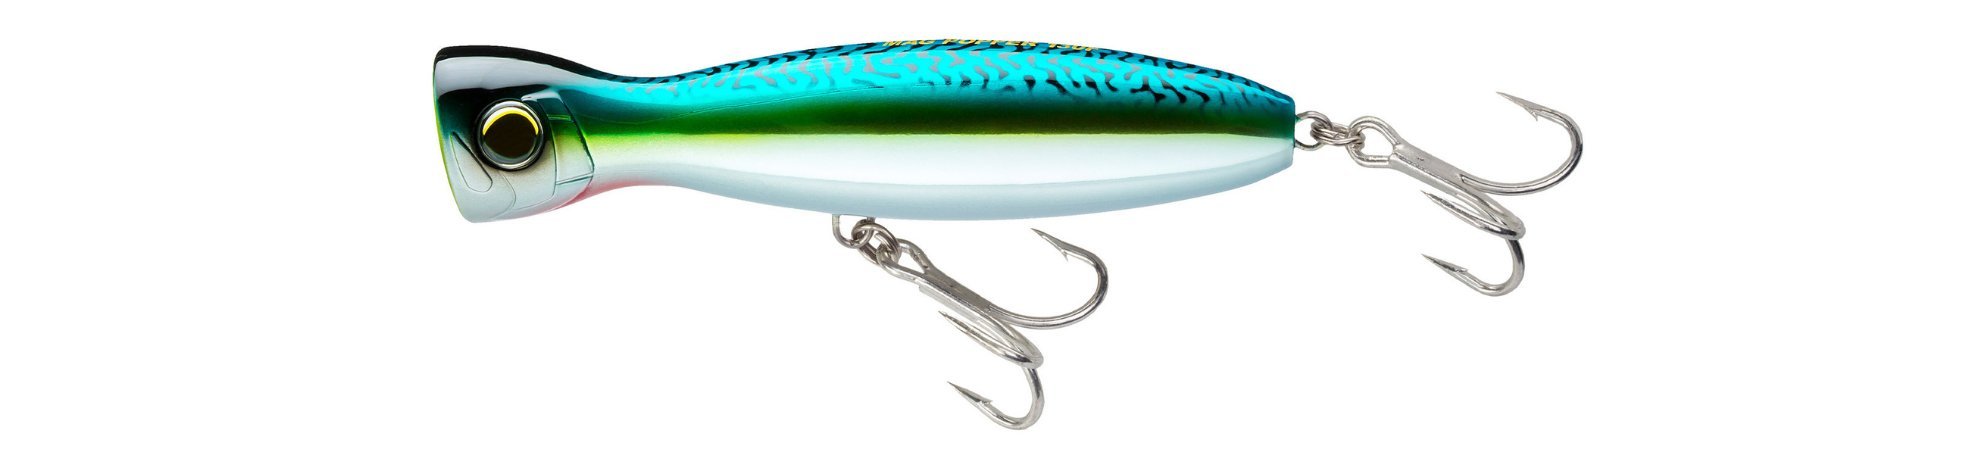 JerkBaitPro™ SURFACE Popper Fishing Lures - 5 colors, 70mm, 10g